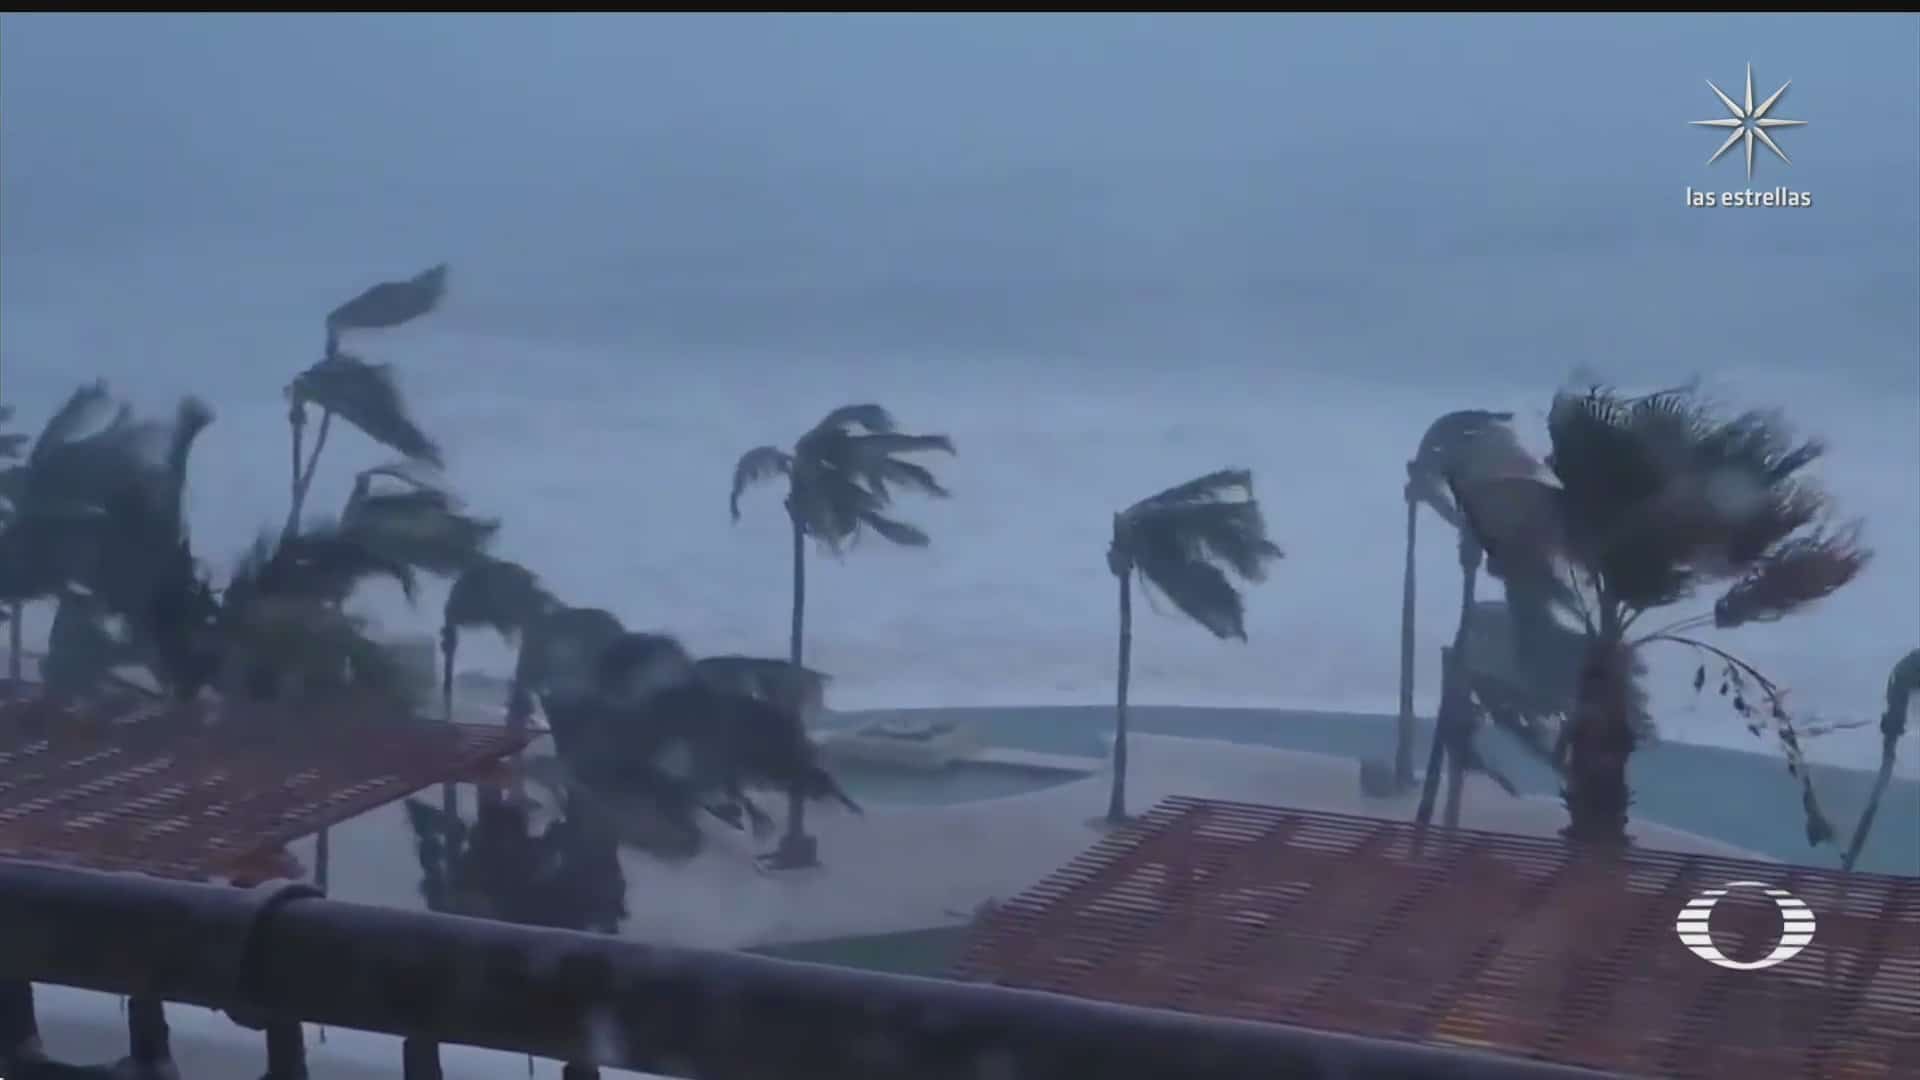 huracan olaf causa alerta por lluvias torrenciales